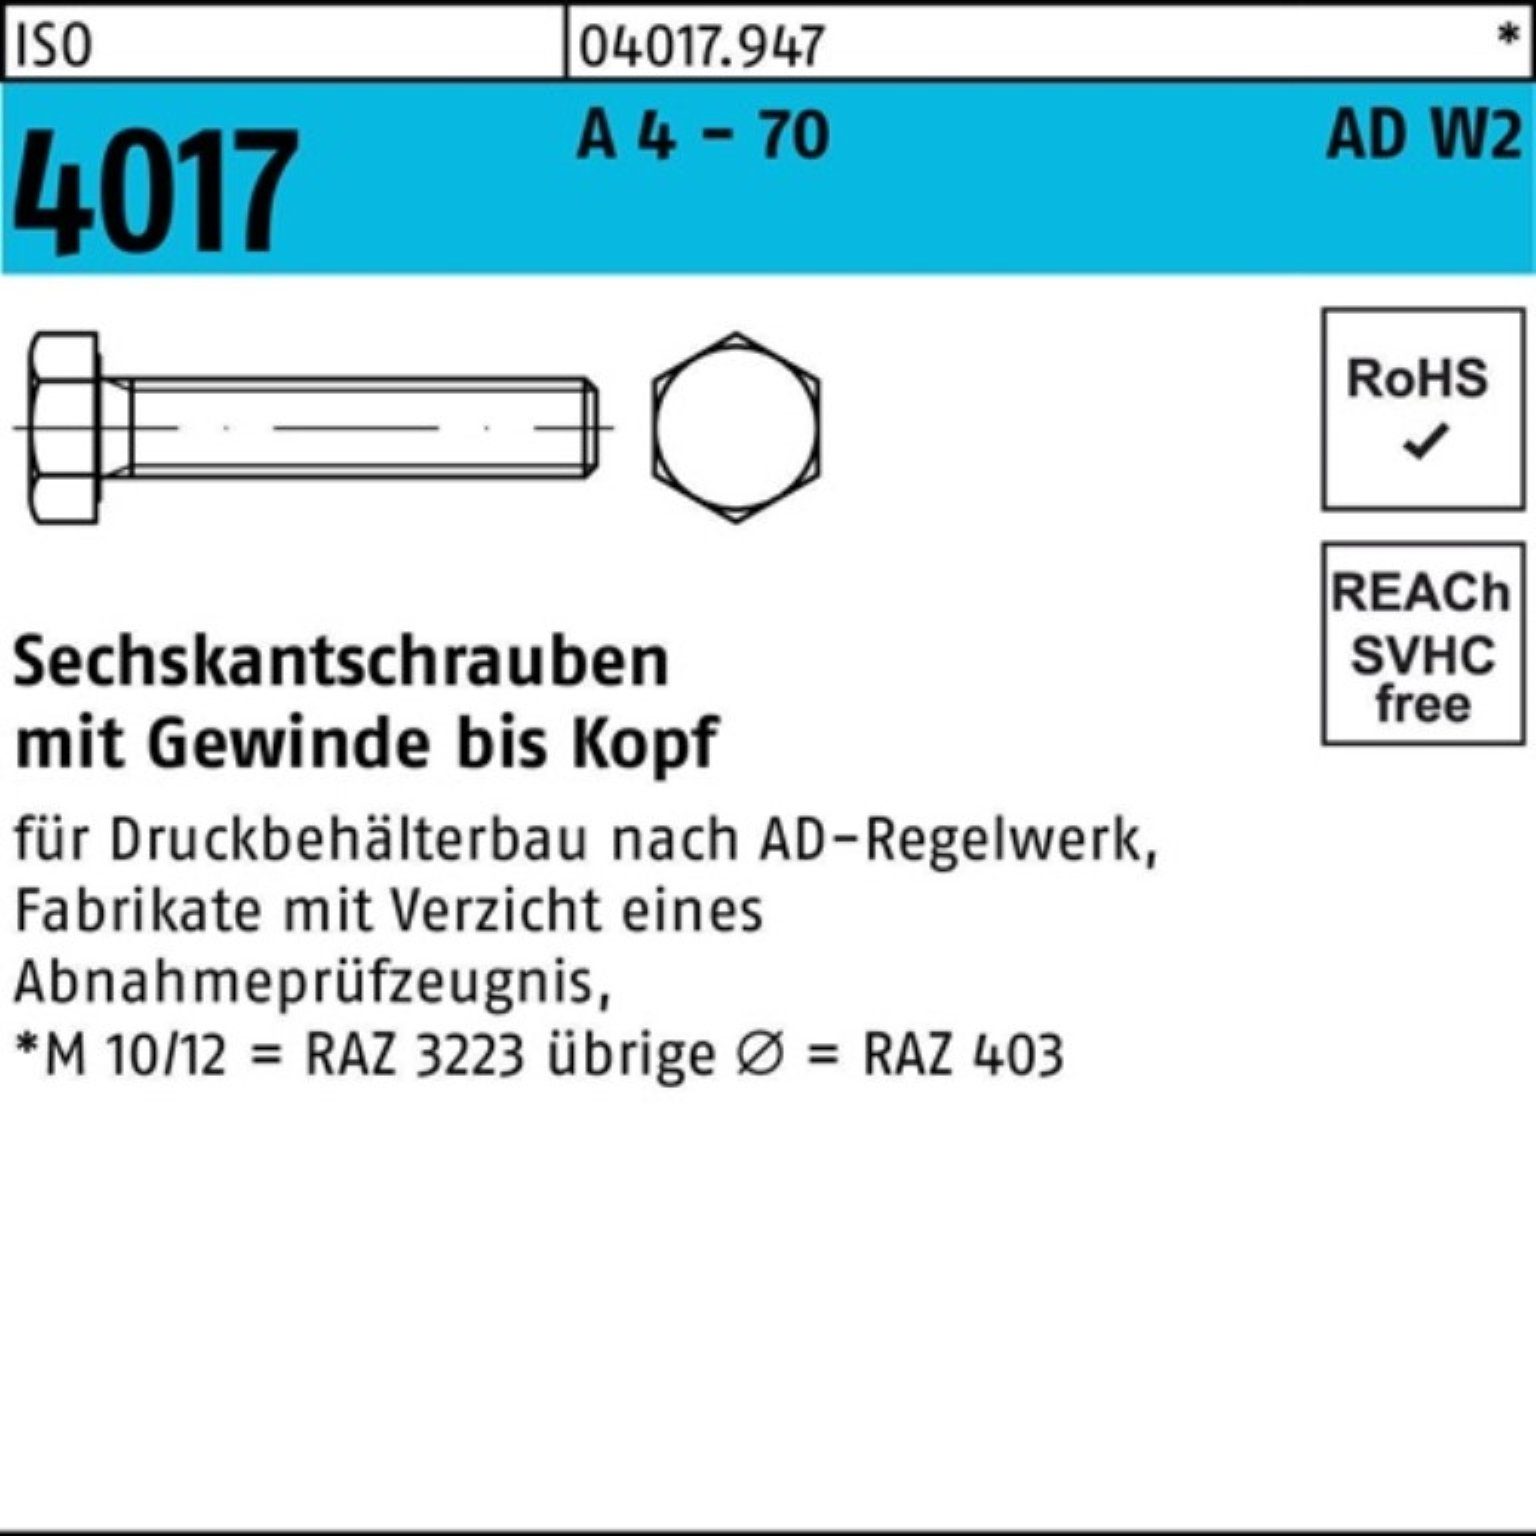 Bufab Sechskantschraube 100er Pack Sechskantschraube ISO 4017 VG M16x 50 A 4 - 70 AD-W2 25 St